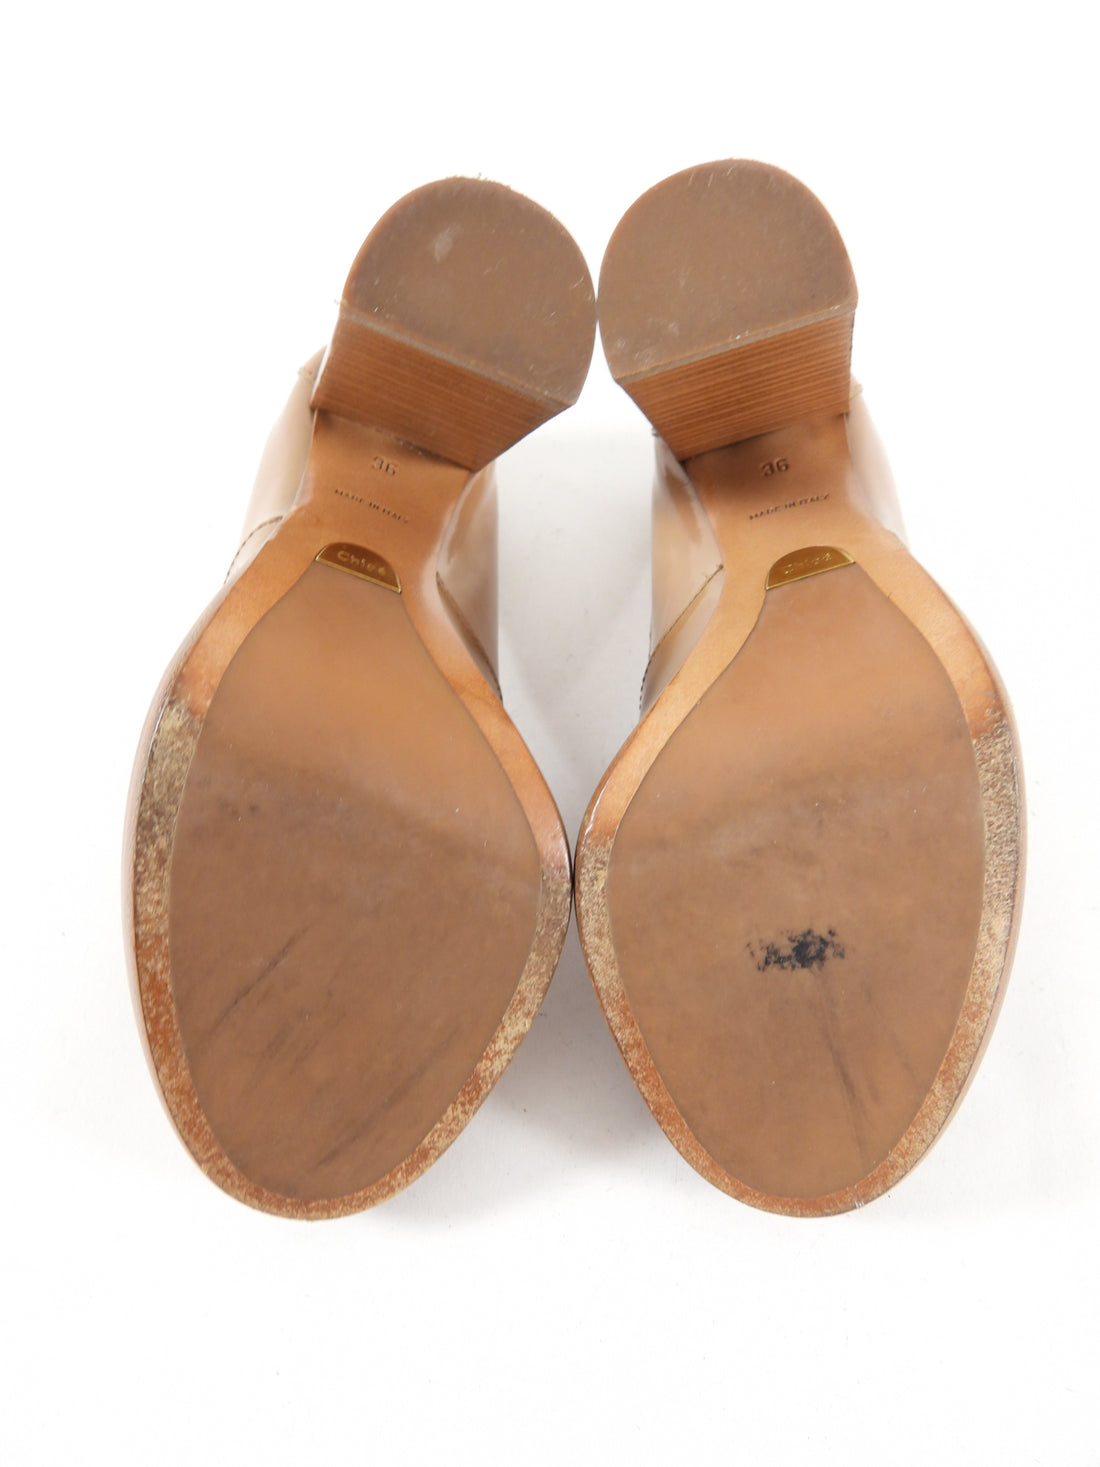 Chloe Brown Gloss Leather Wood Heel Pumps - 36 / USA 5.5